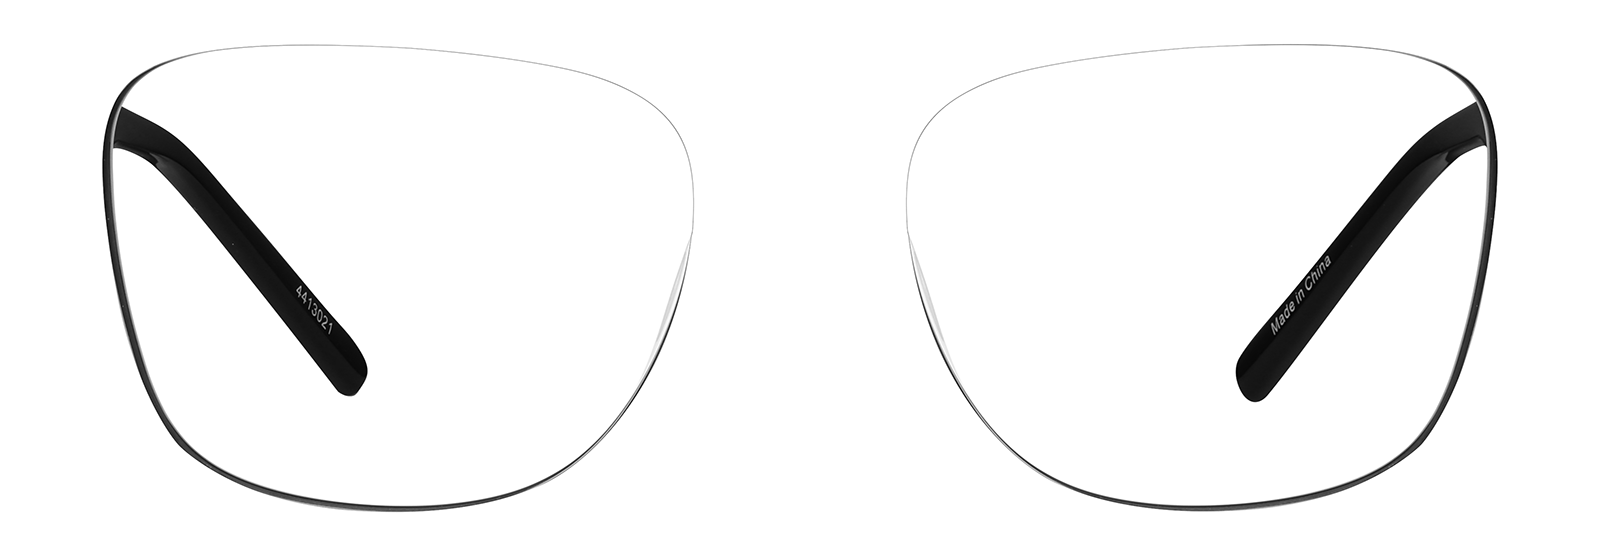 Sausalito Eyeglasseslens arm image